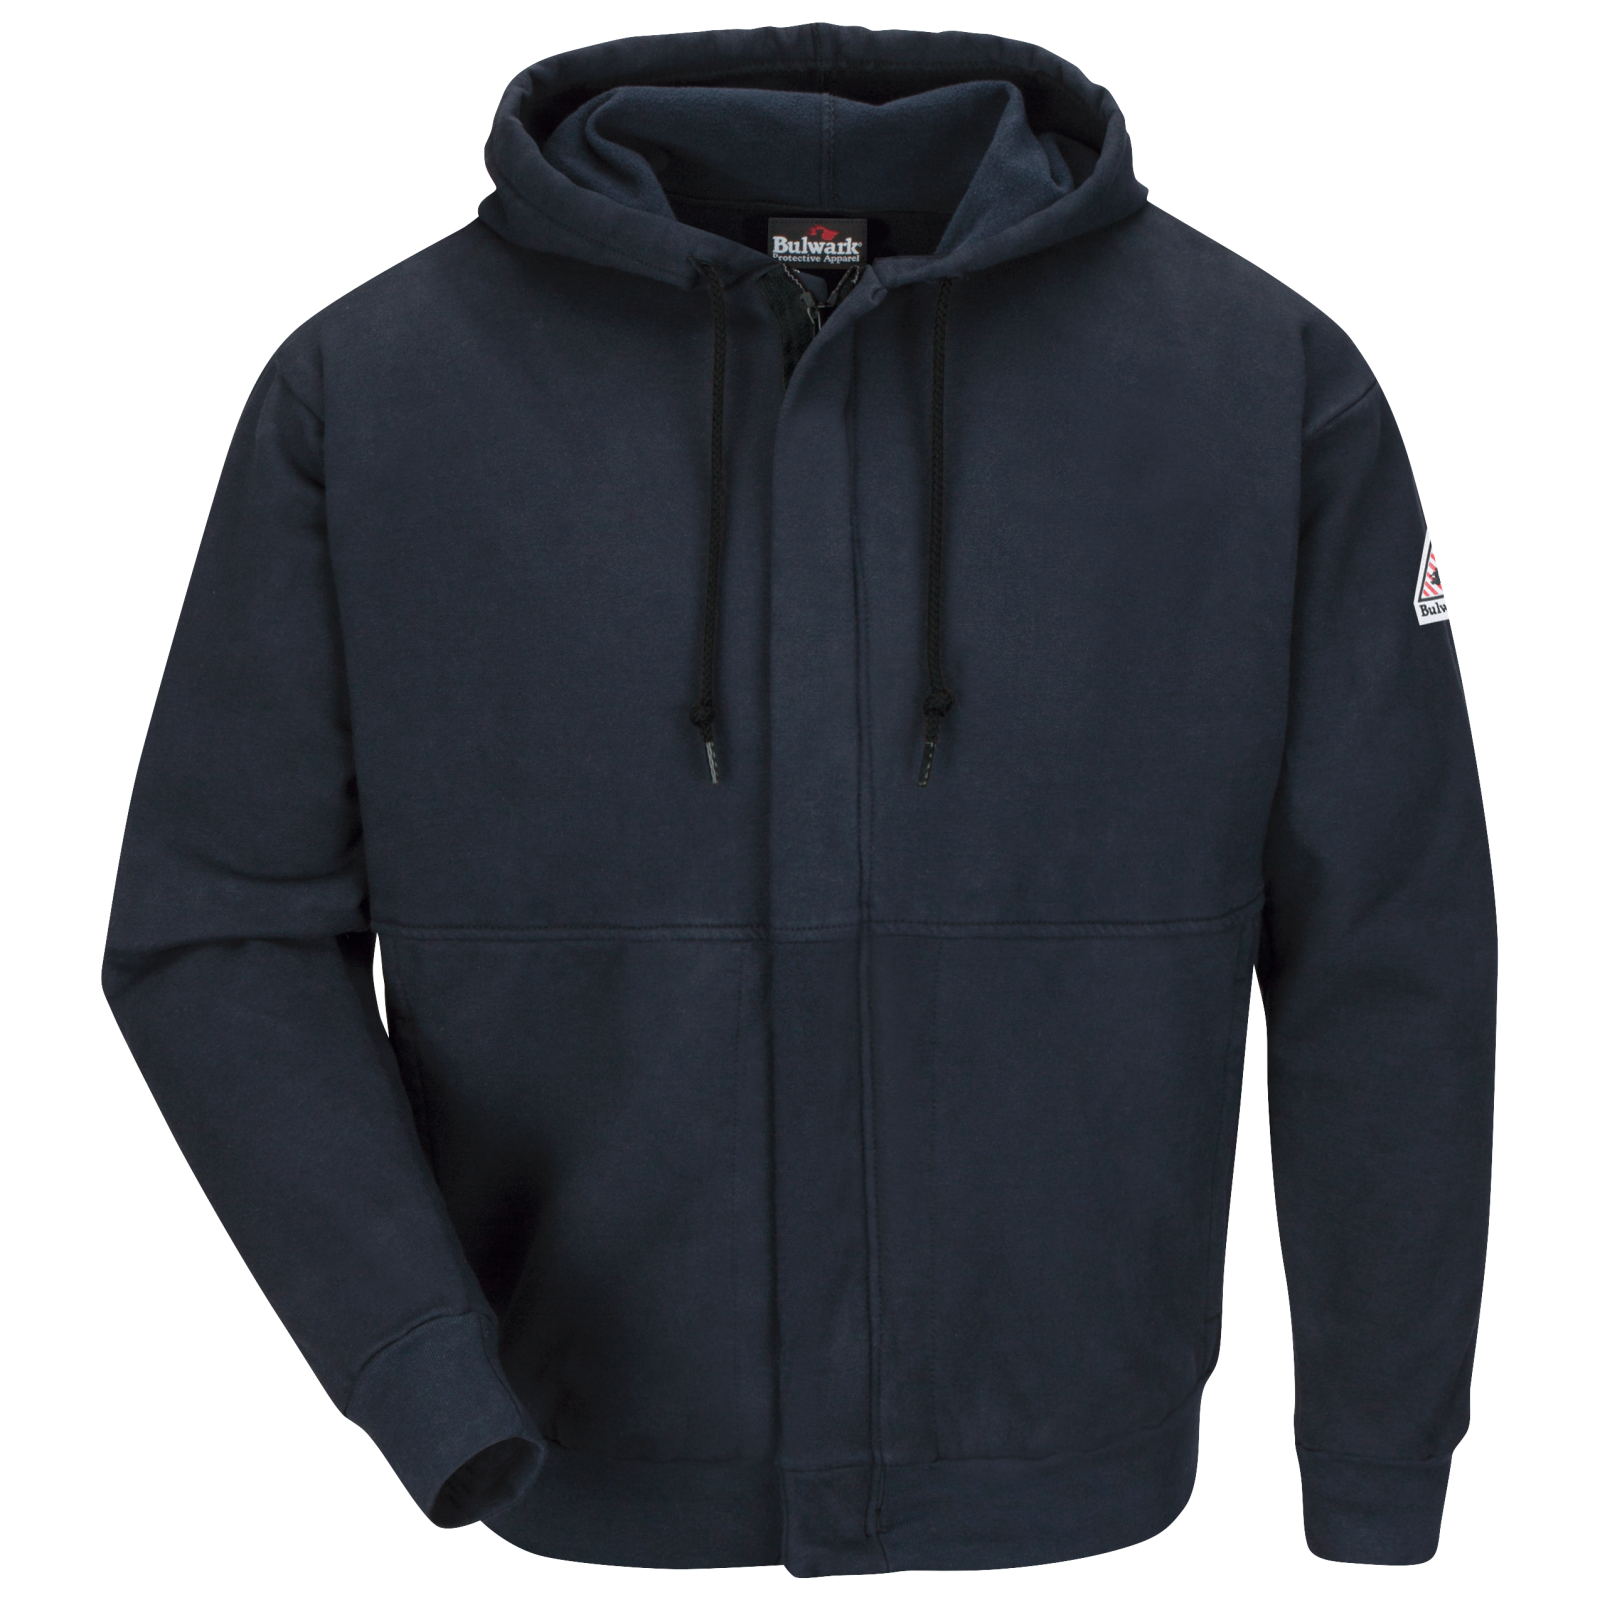 Bulwark Men's Fleece Navy Fire-Resistant Pullover Hooded Sweatshirt from Columbia Safety